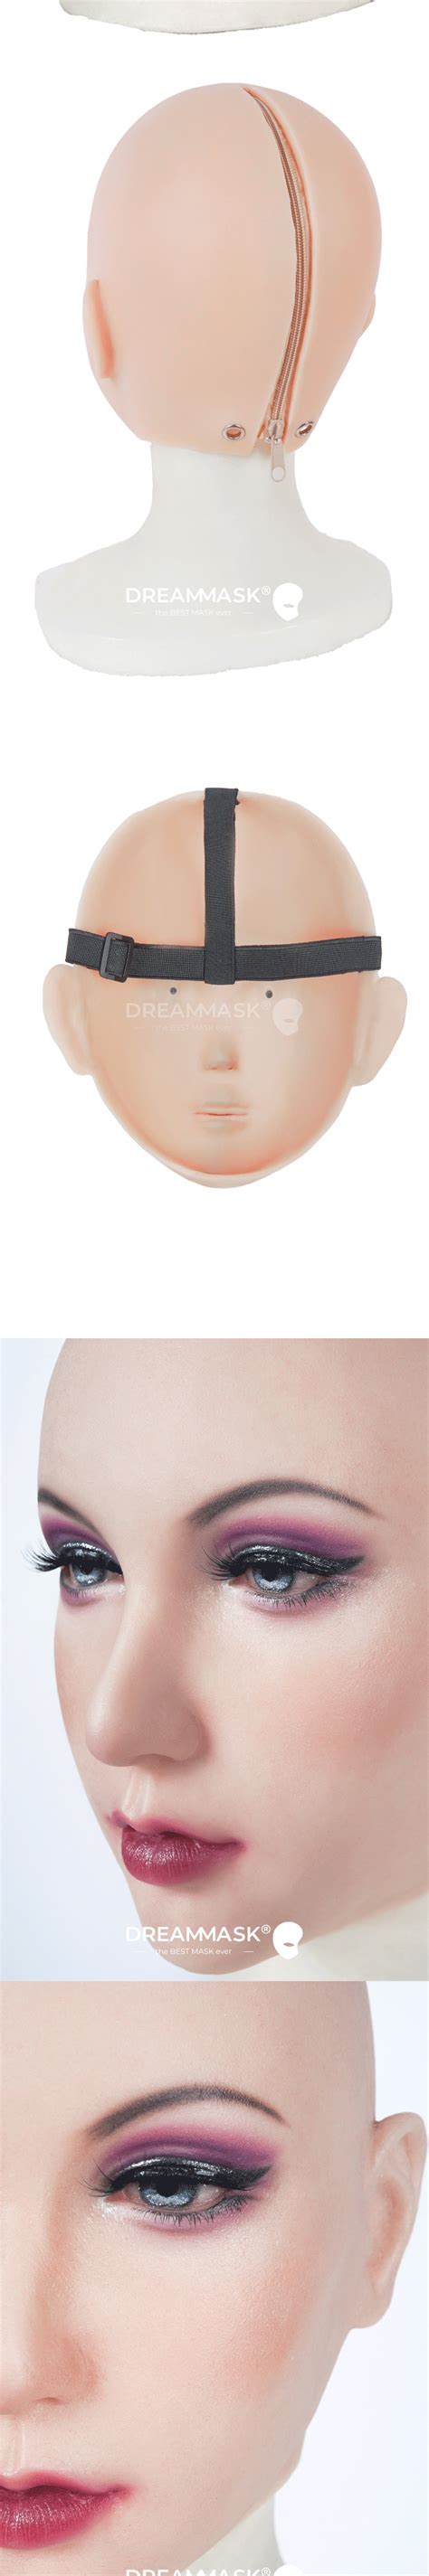 Ching4m America Makeup Crossdress Silicone Female Mask Fullhalf Head Transgender Realistic